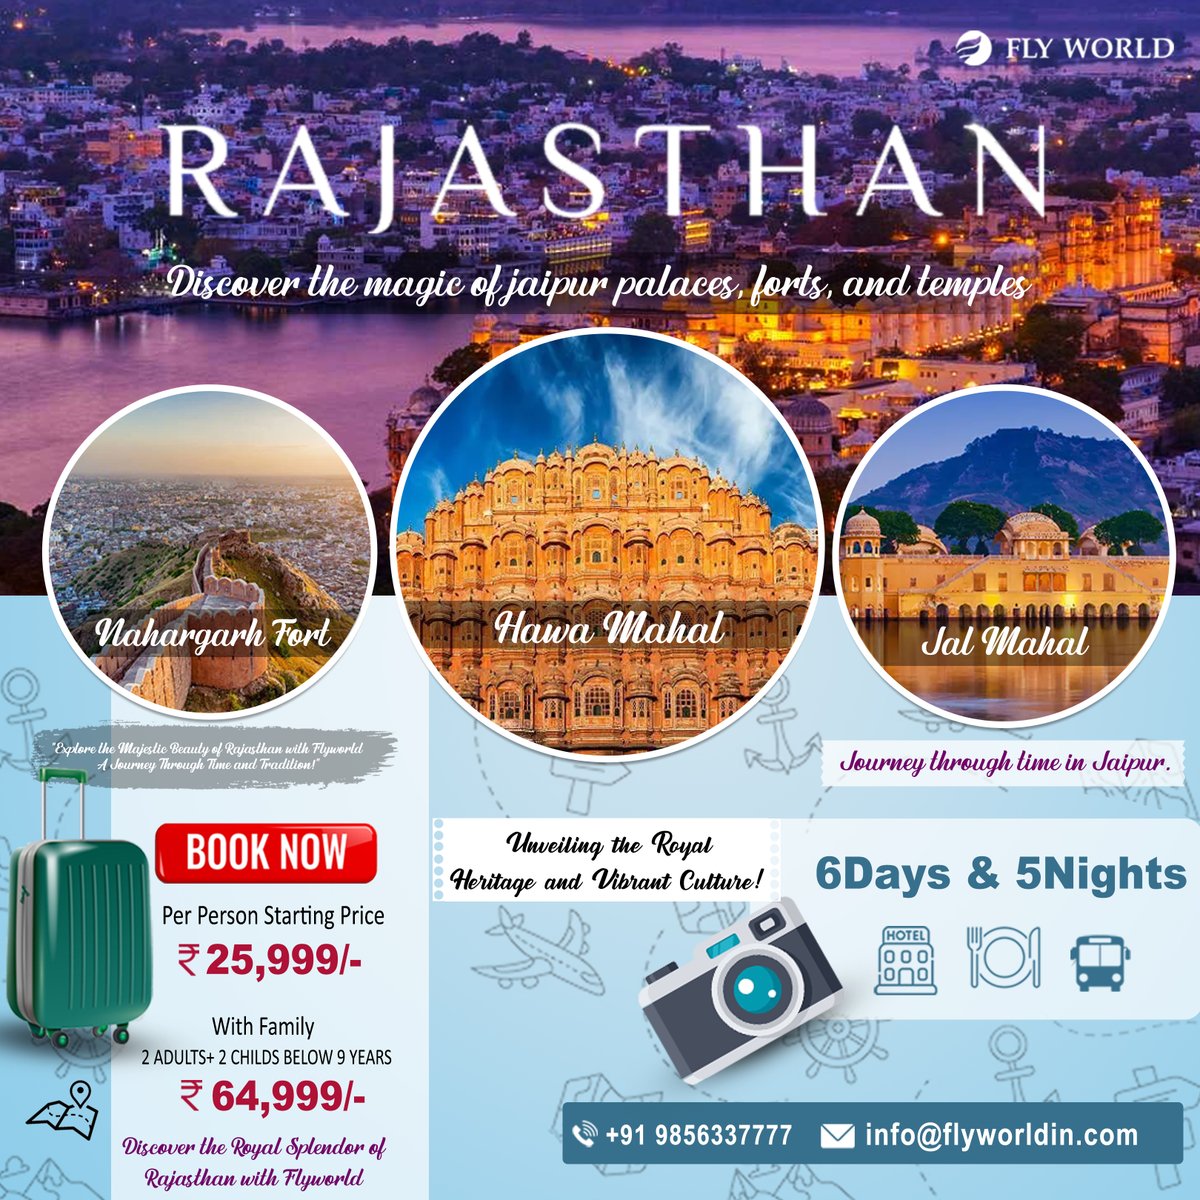 'Embark on a royal adventure through the enchanting land of Rajasthan with Flyworld!
𝐂𝐨𝐧𝐭𝐚𝐜𝐭 𝐔𝐬: +91 98563 37777 
#flyworld #ExploreRajasthan #rajasthan #tour #travel #offer #discount #special #jaipur #pinkcity #pinkcityjaipur #instagram #instagood